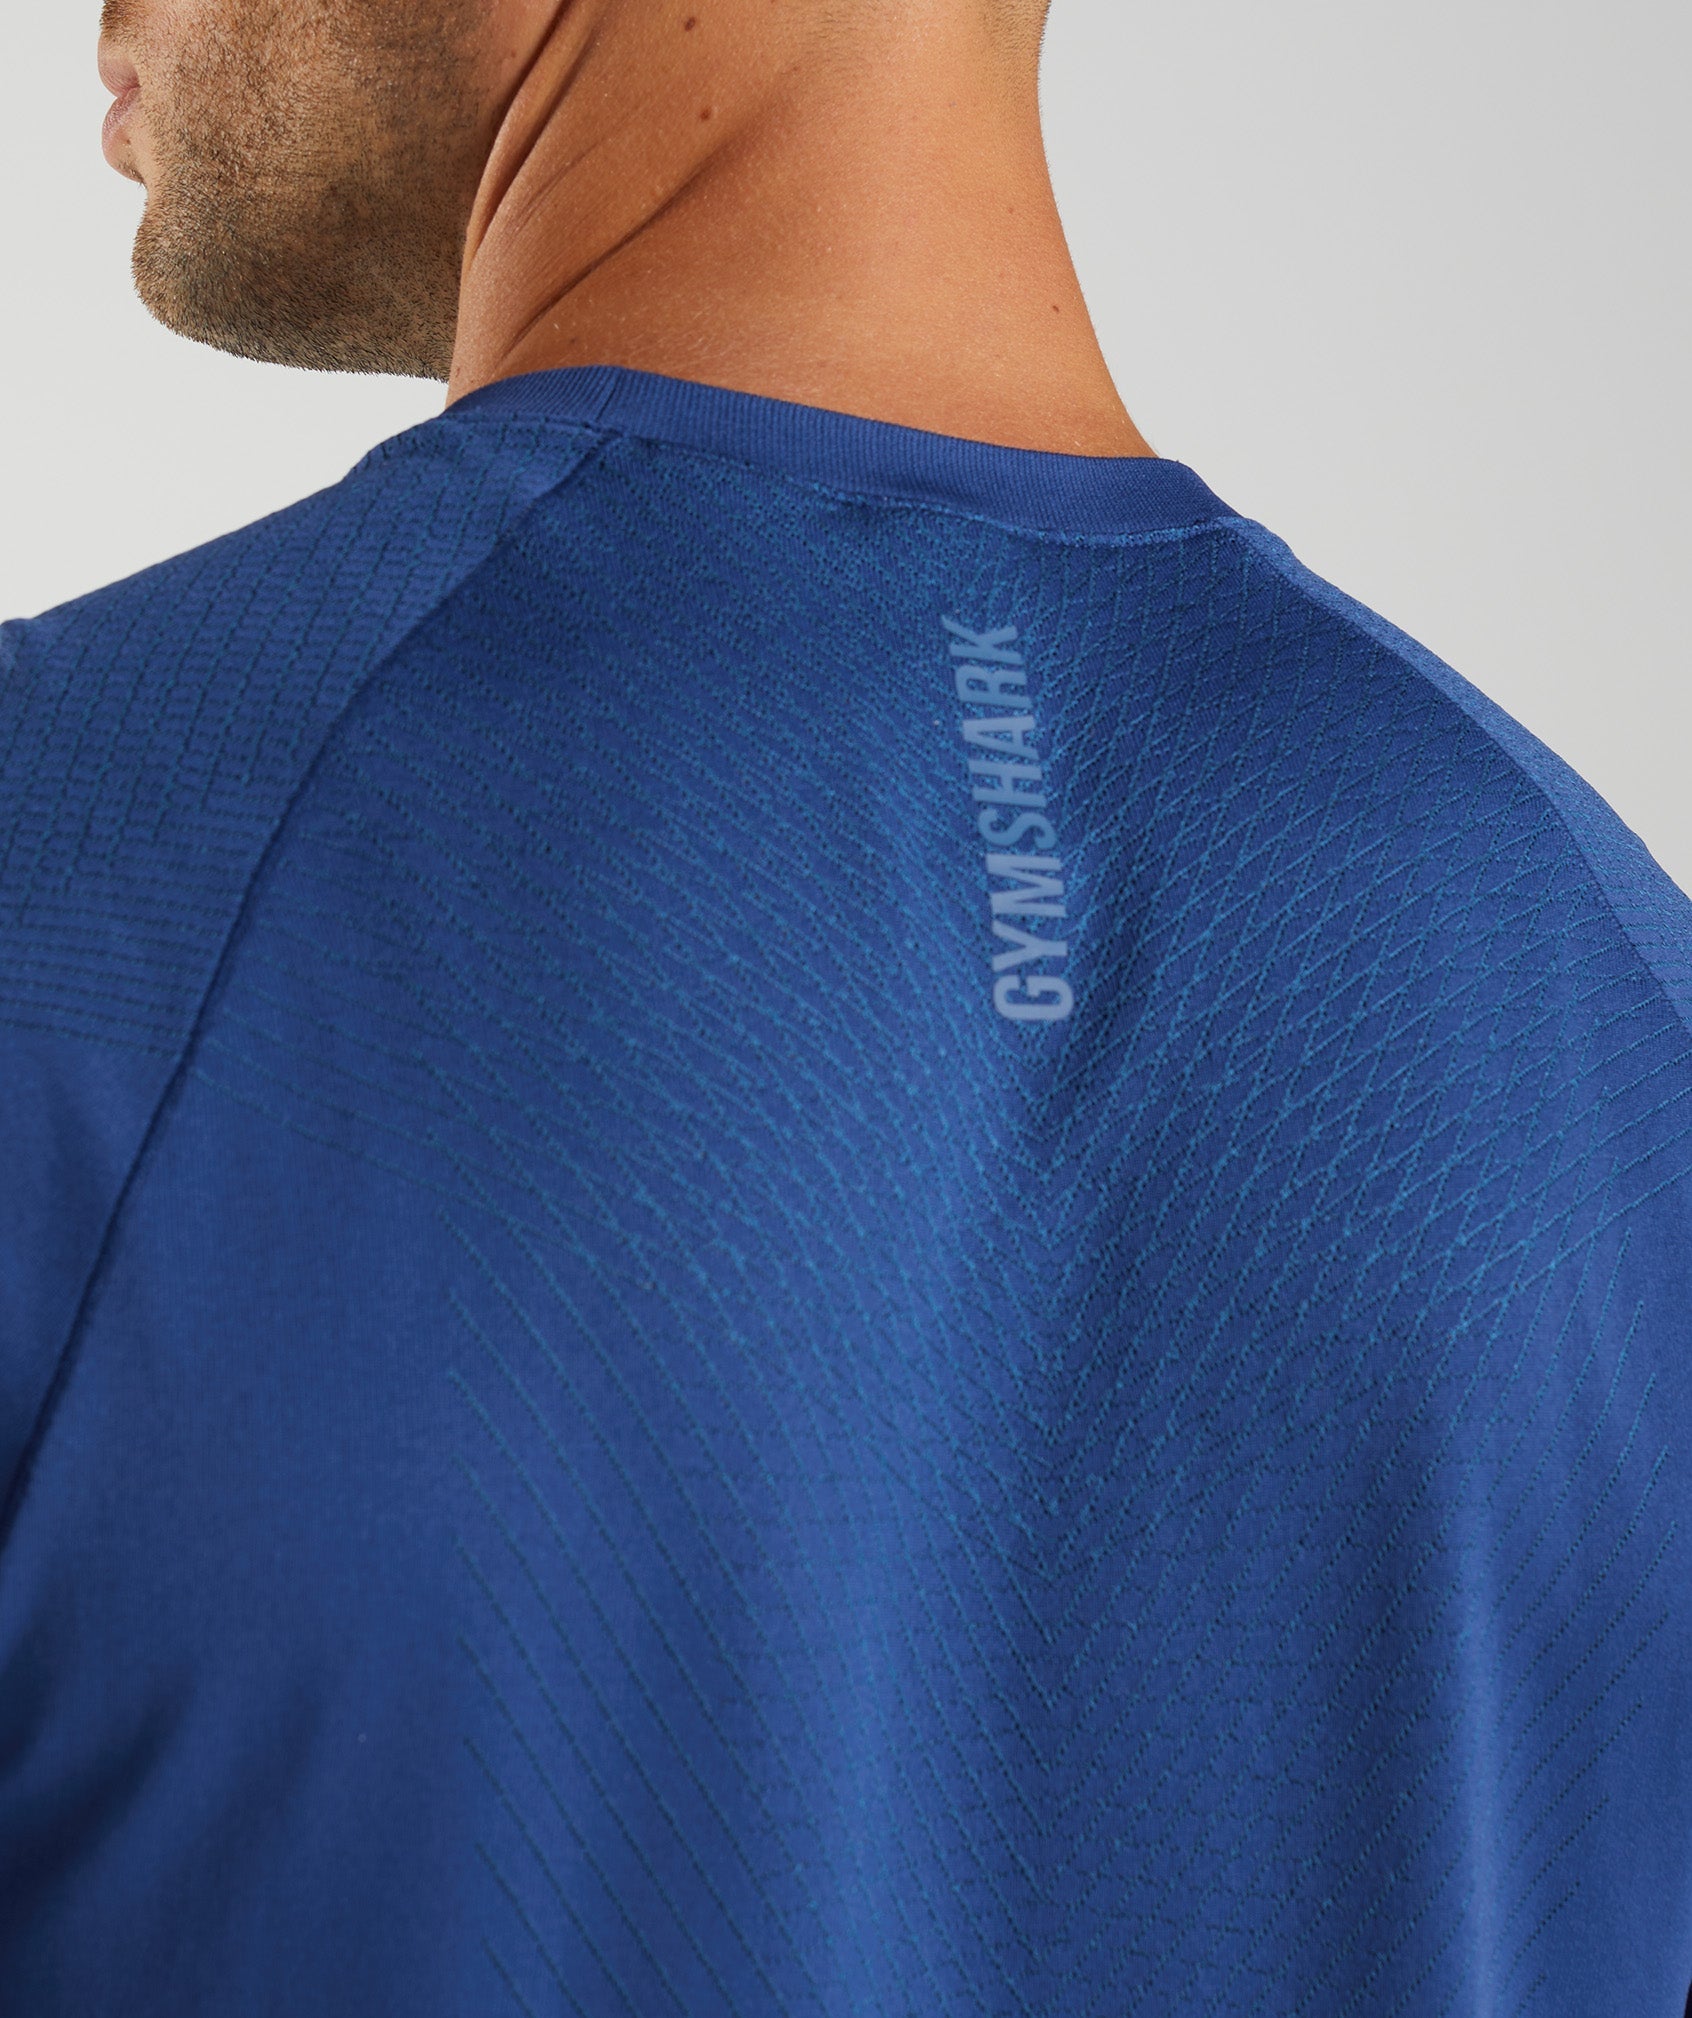 Apex Seamless T-Shirt in Stellar Blue/Lakeside Blue